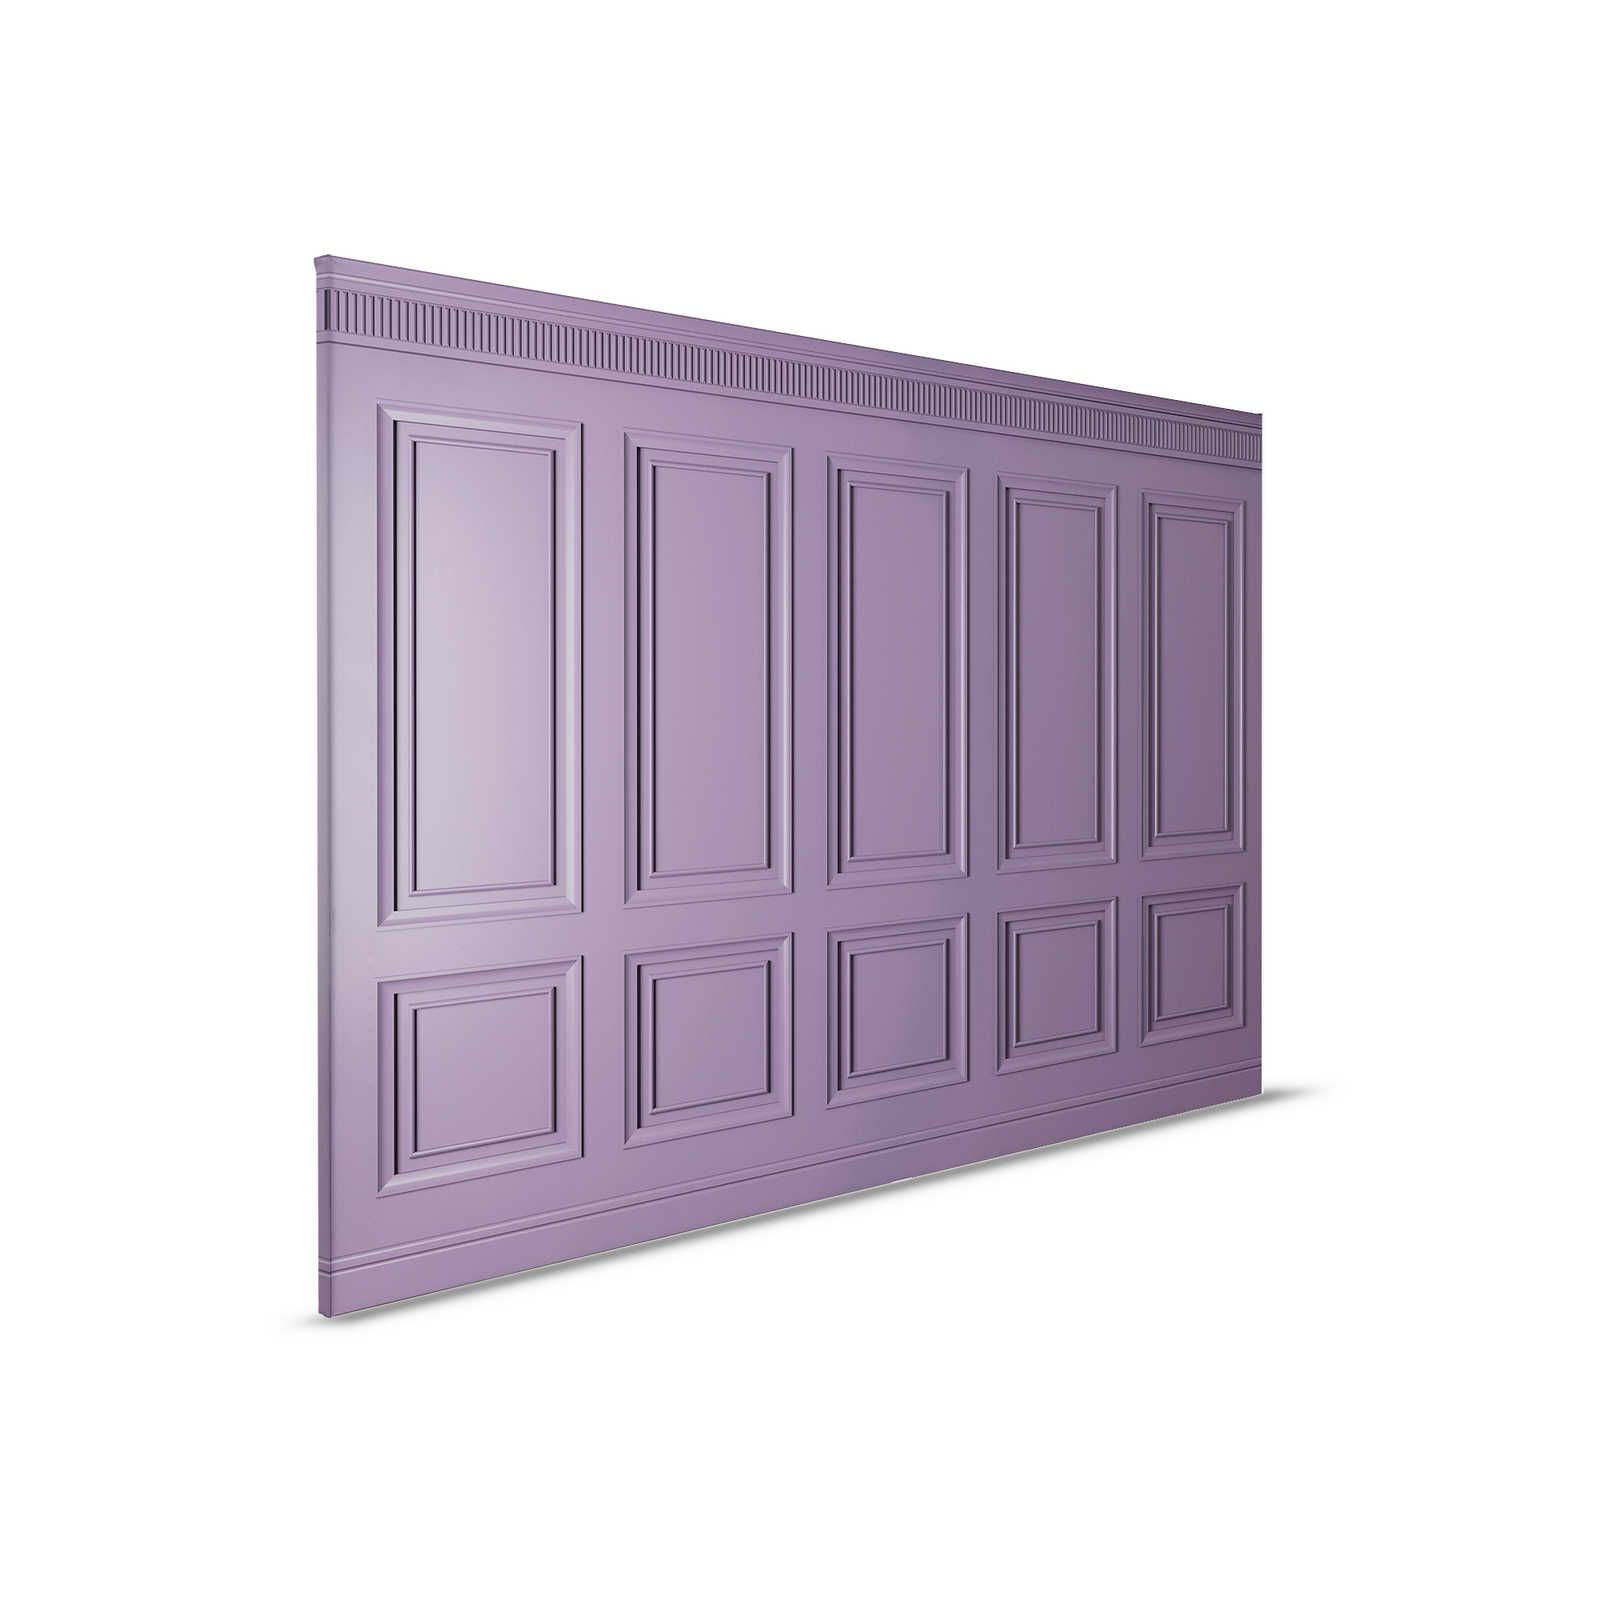         Kensington 3 - 3D Leinwandbild Holzvertäfelung dunkles Lila, Violett – 0,90 m x 0,60 m
    